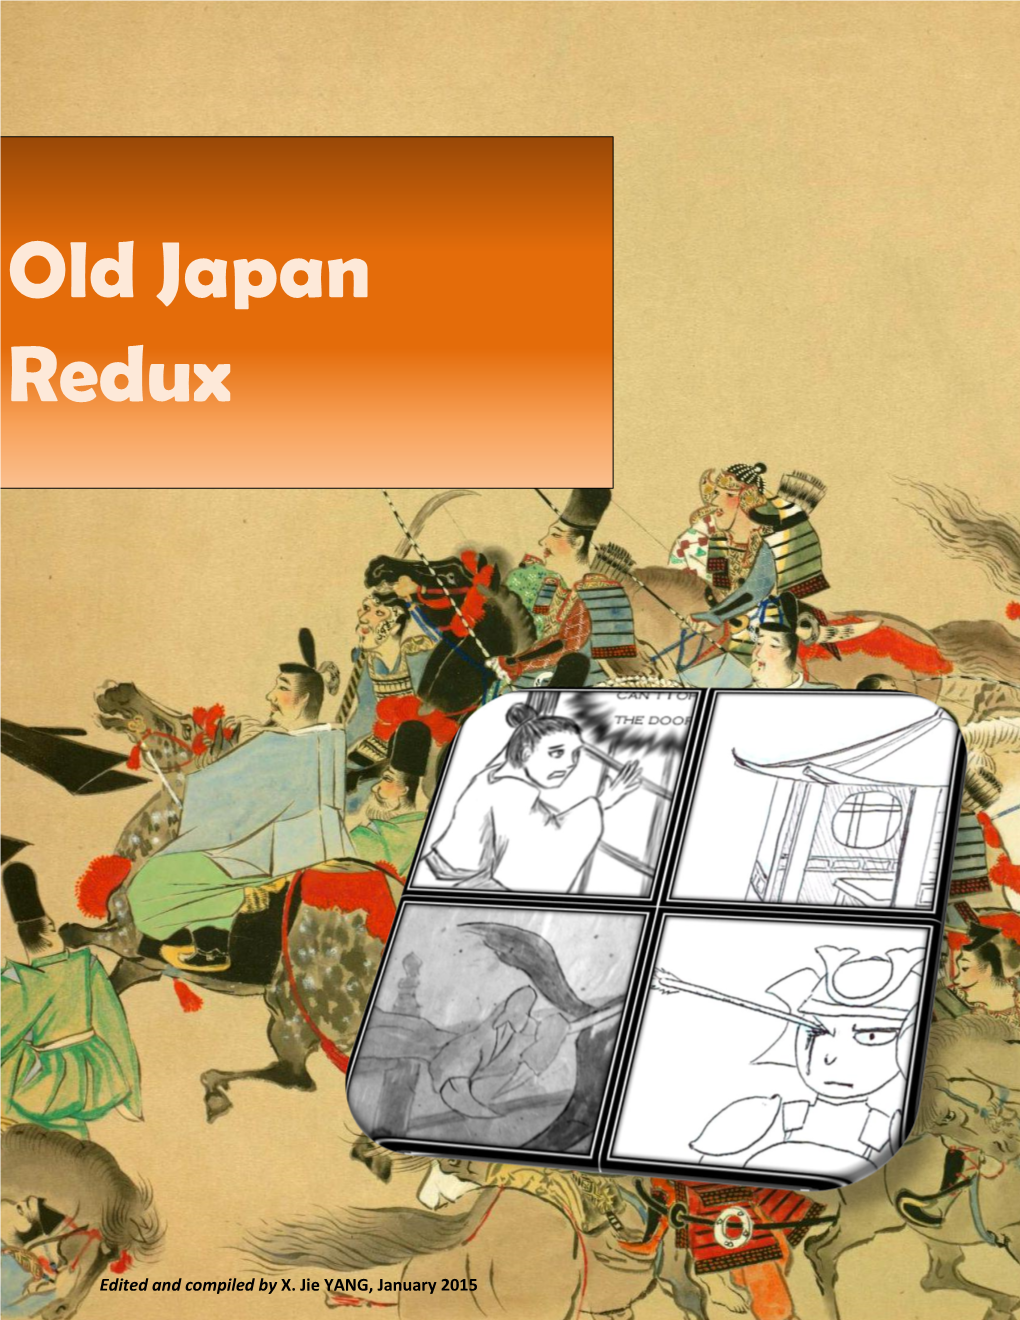 Old Japan Redux